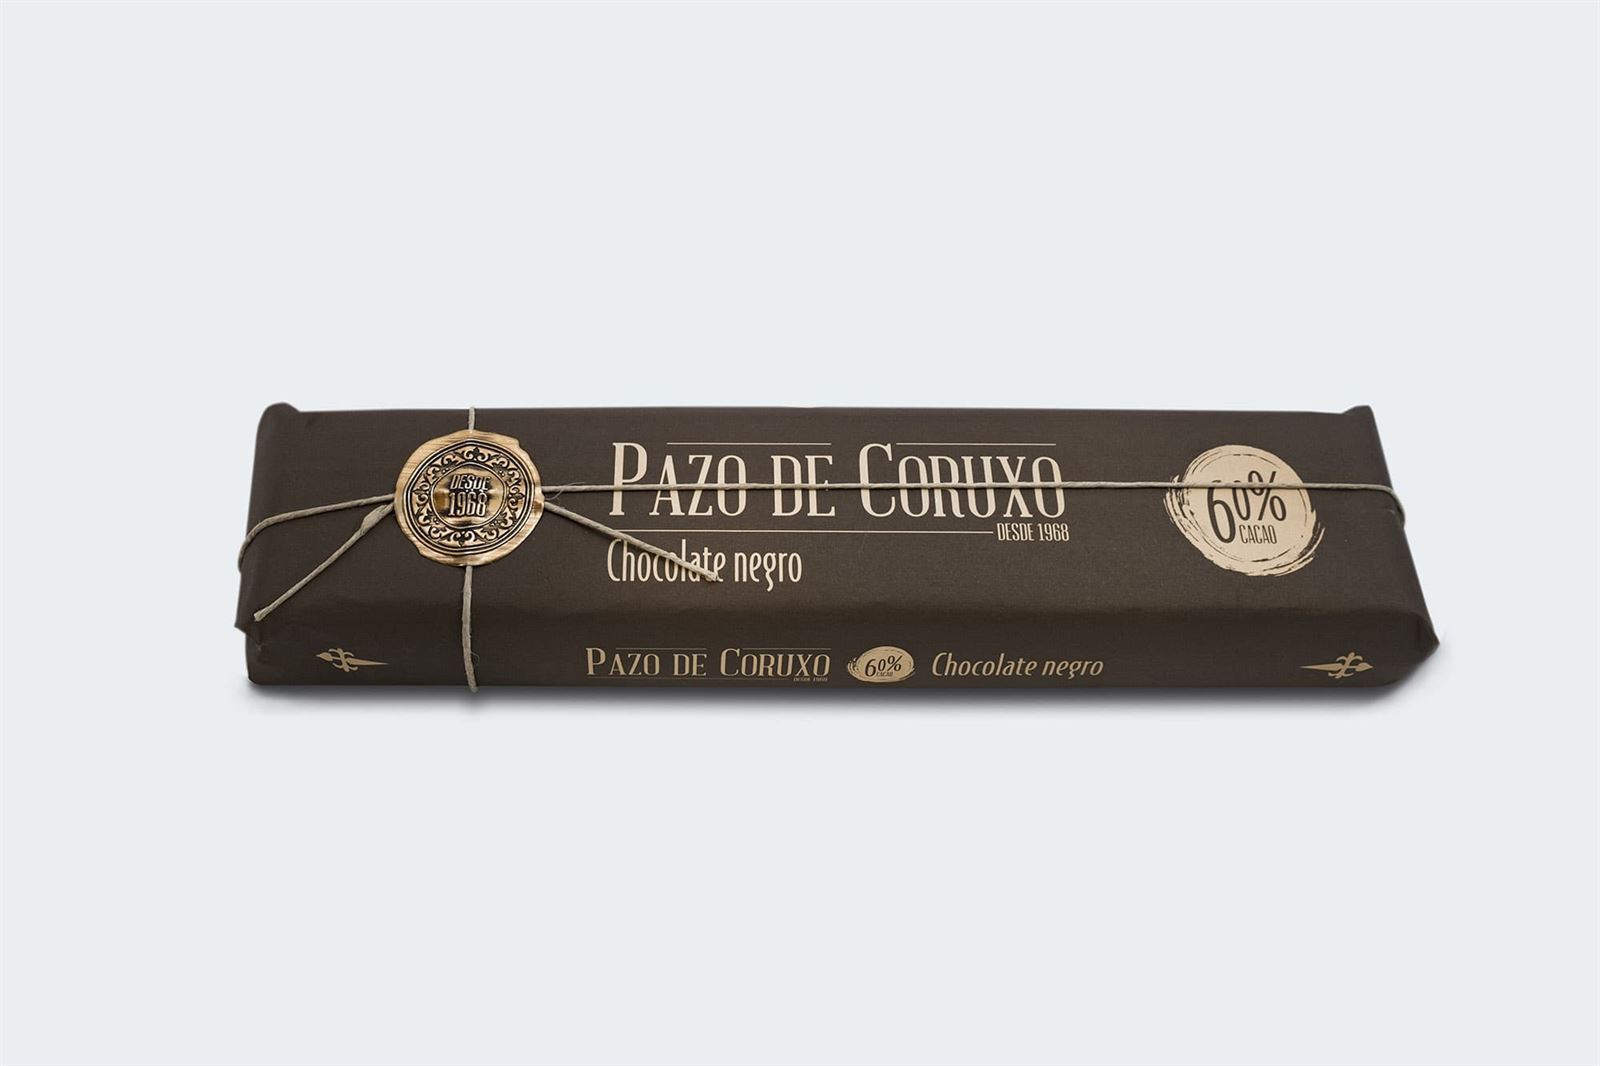 Tableta Chocolate Negro Pazo de Coruxo 60% 500grs - Imagen 1